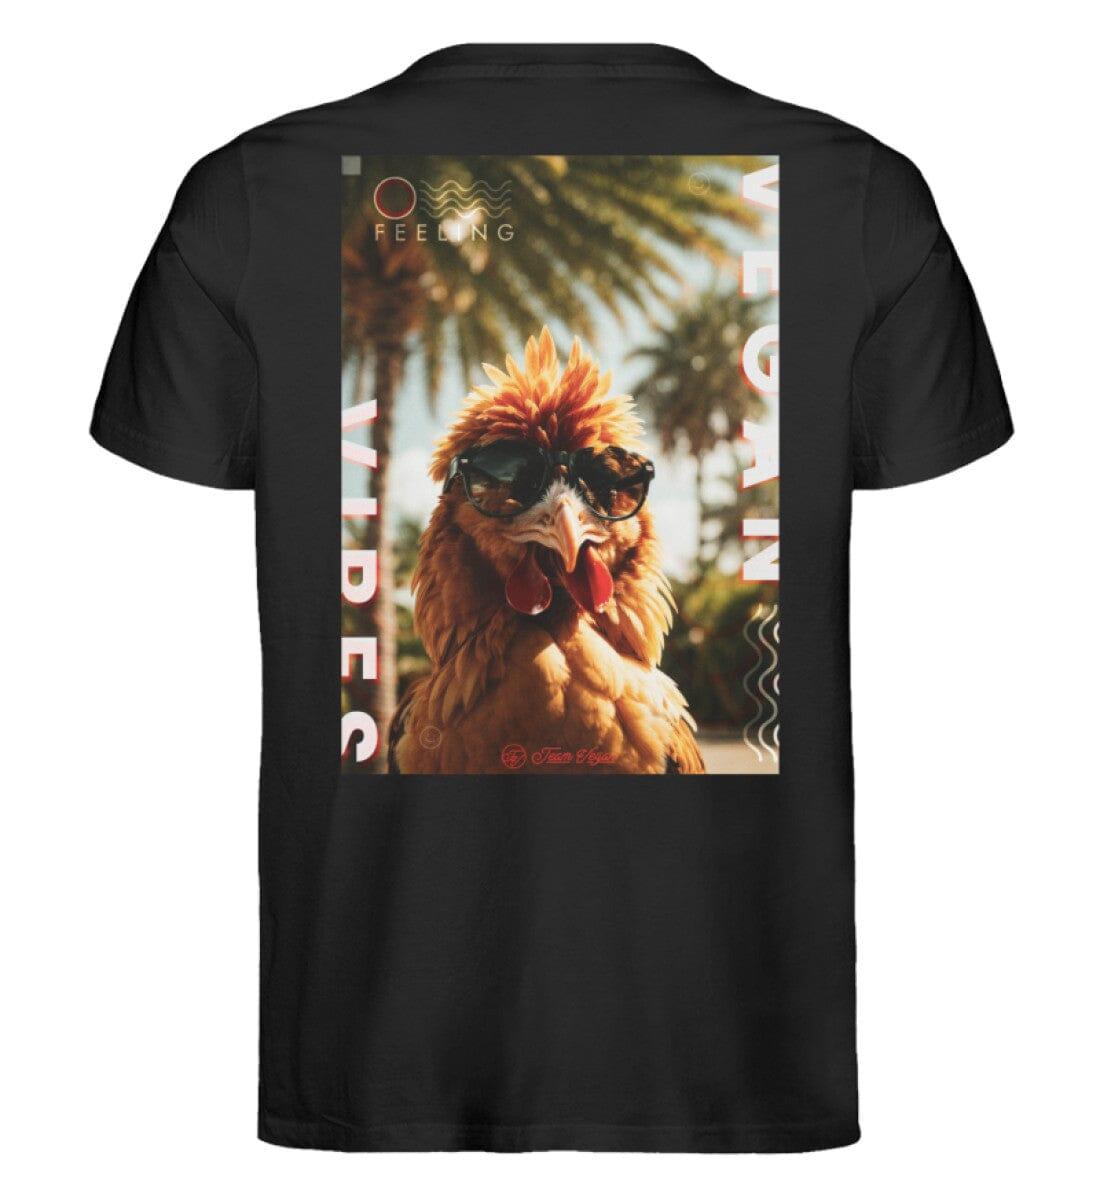 Vegan Vibes - Chicken (beidseitig) - Unisex Organic Shirt - Team Vegan © vegan t shirt